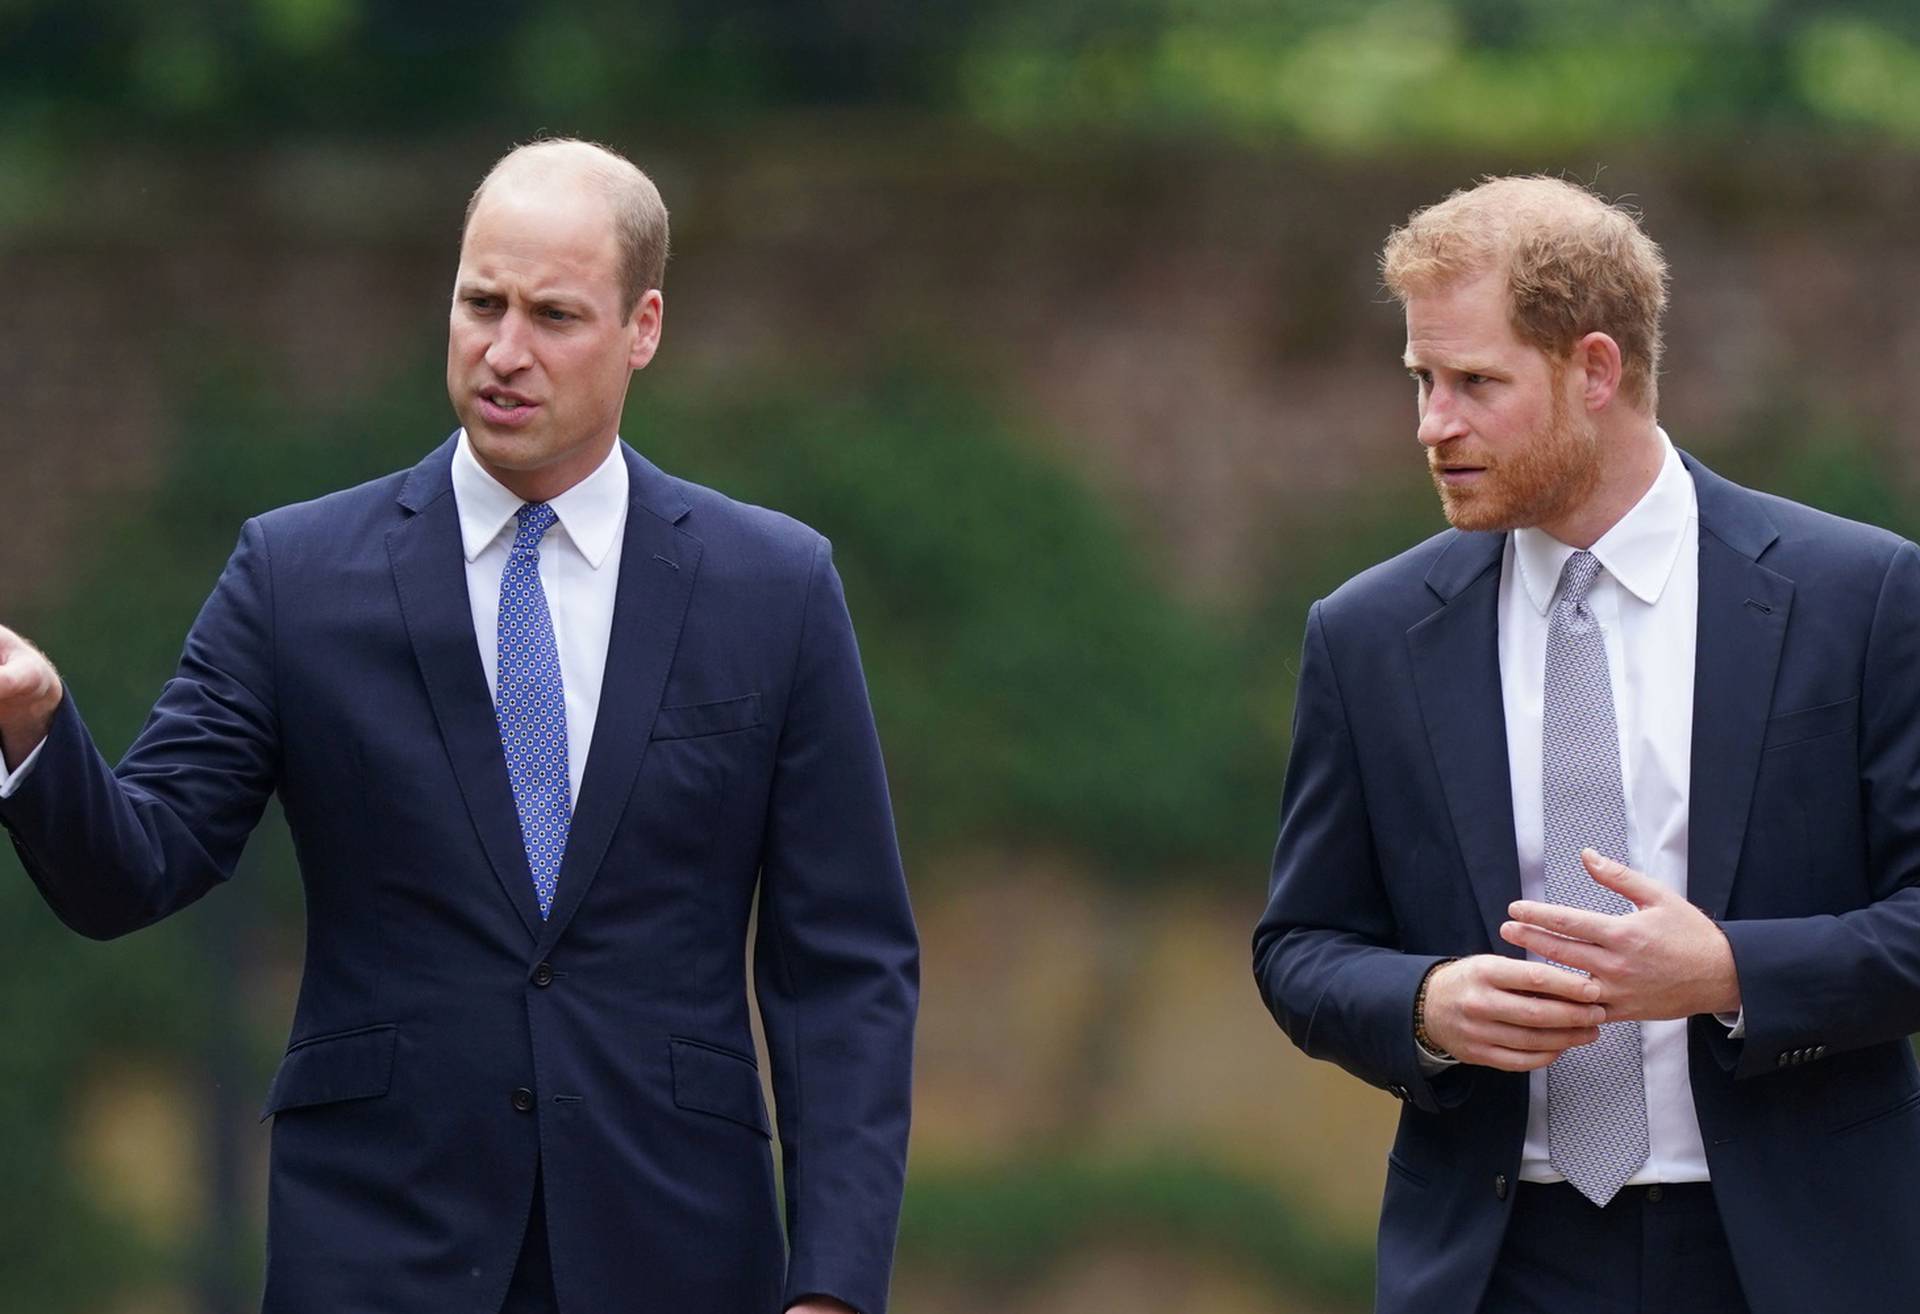 Princ William je uzrujan zbog niza optužbi brata Harryja: 'On je otišao predaleko sa svime'